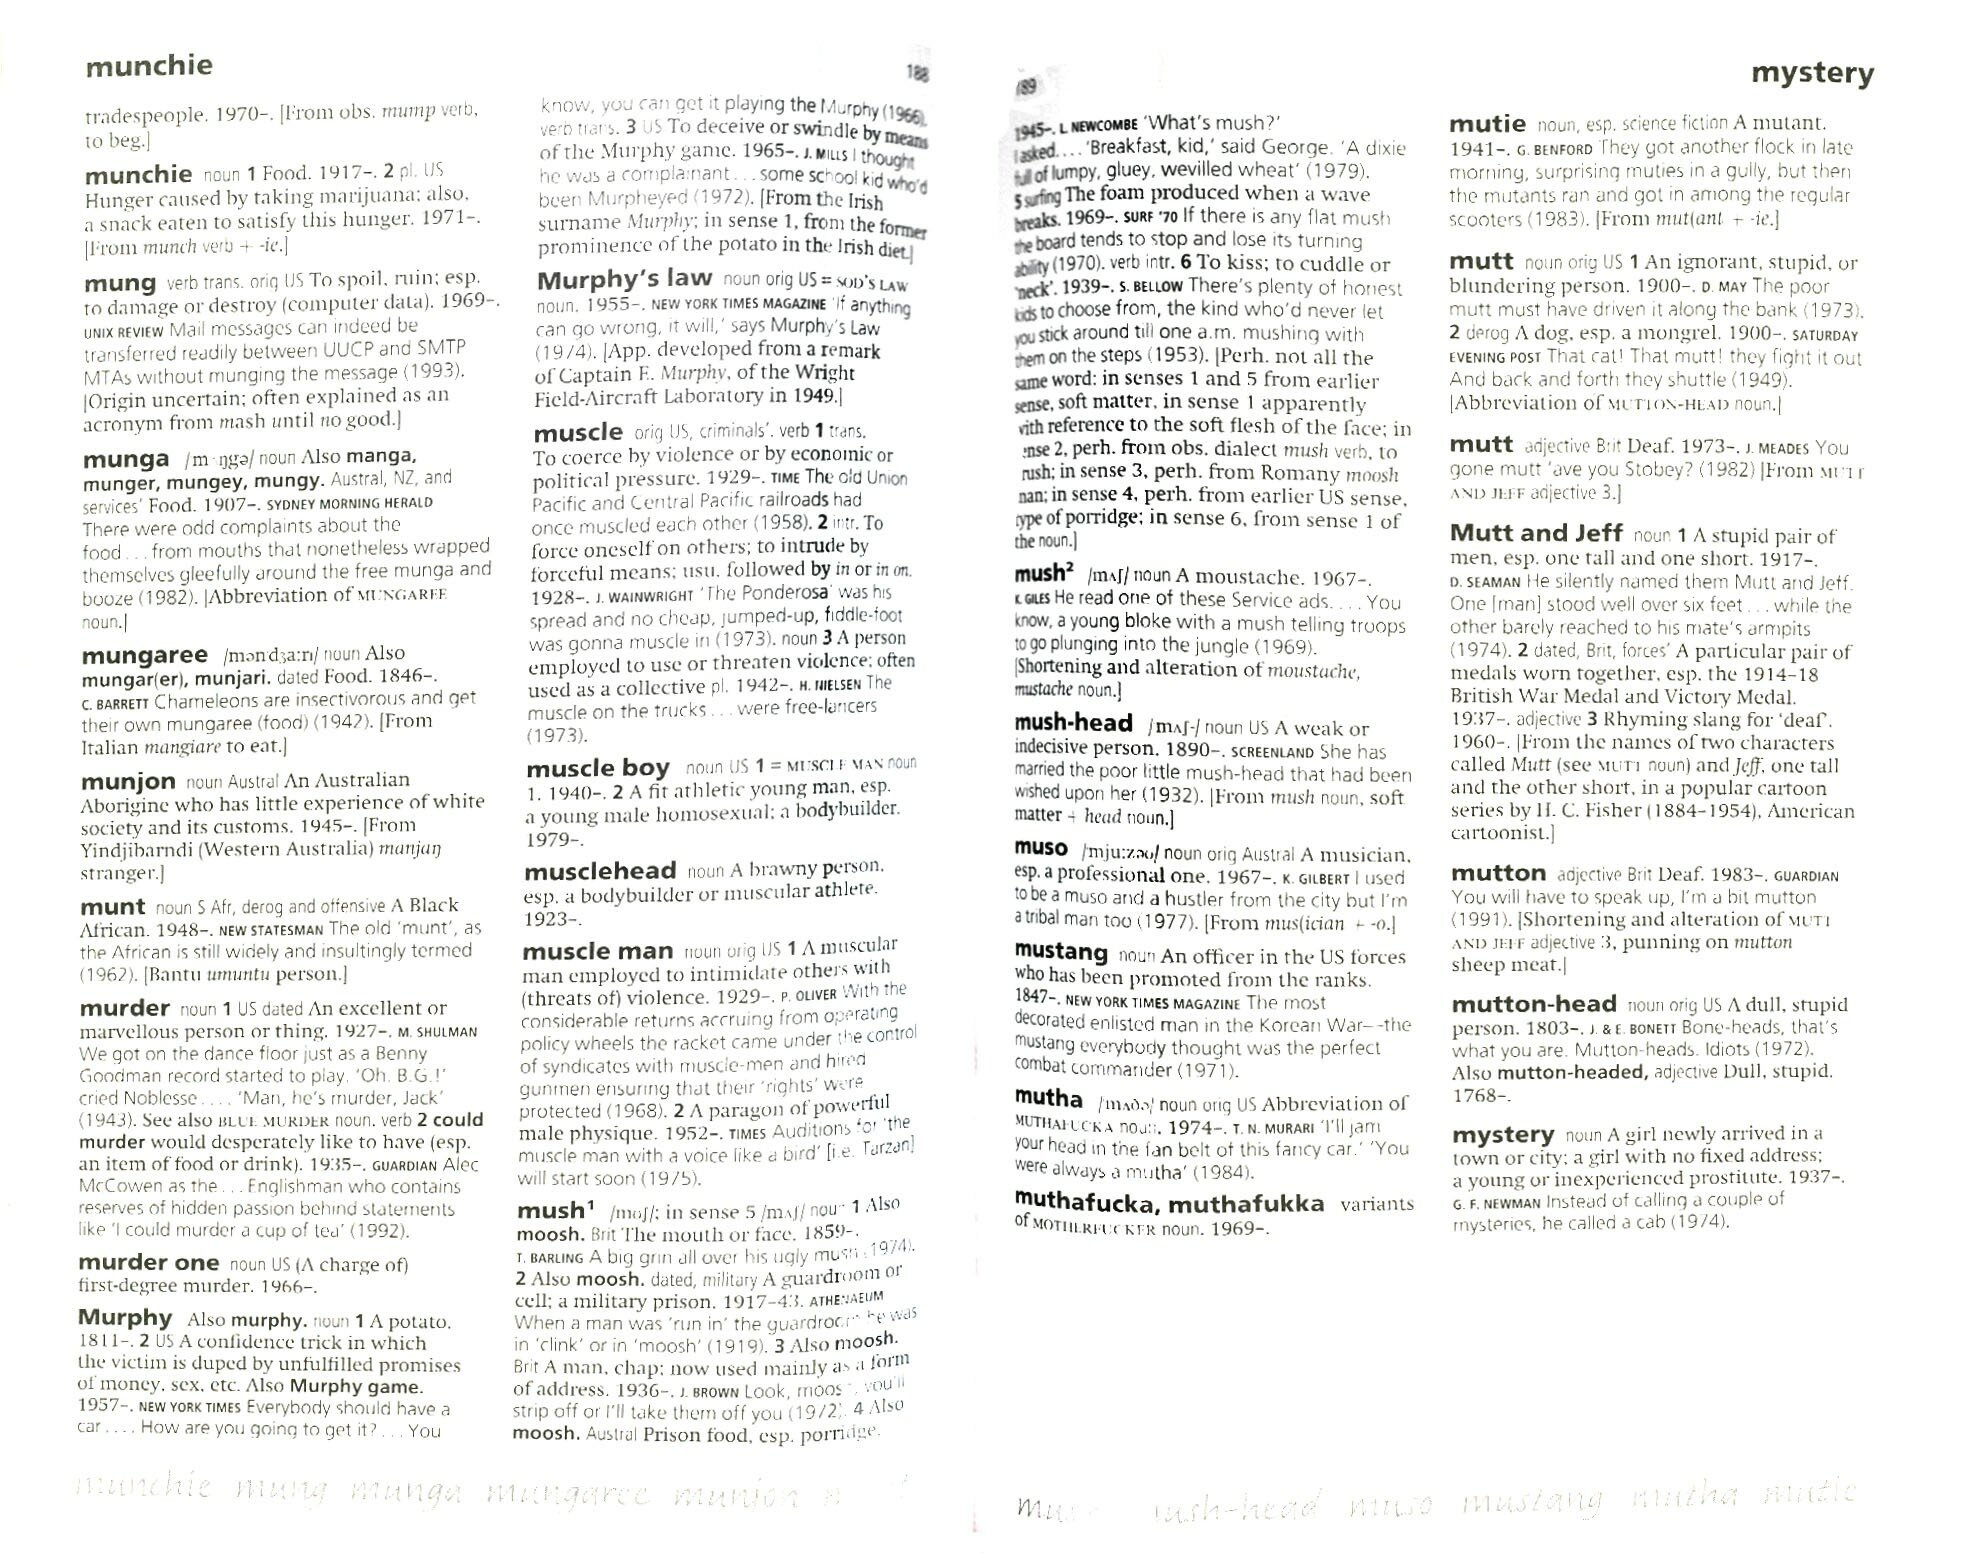 Oxford Dictionary of Modern Slang - фото №2